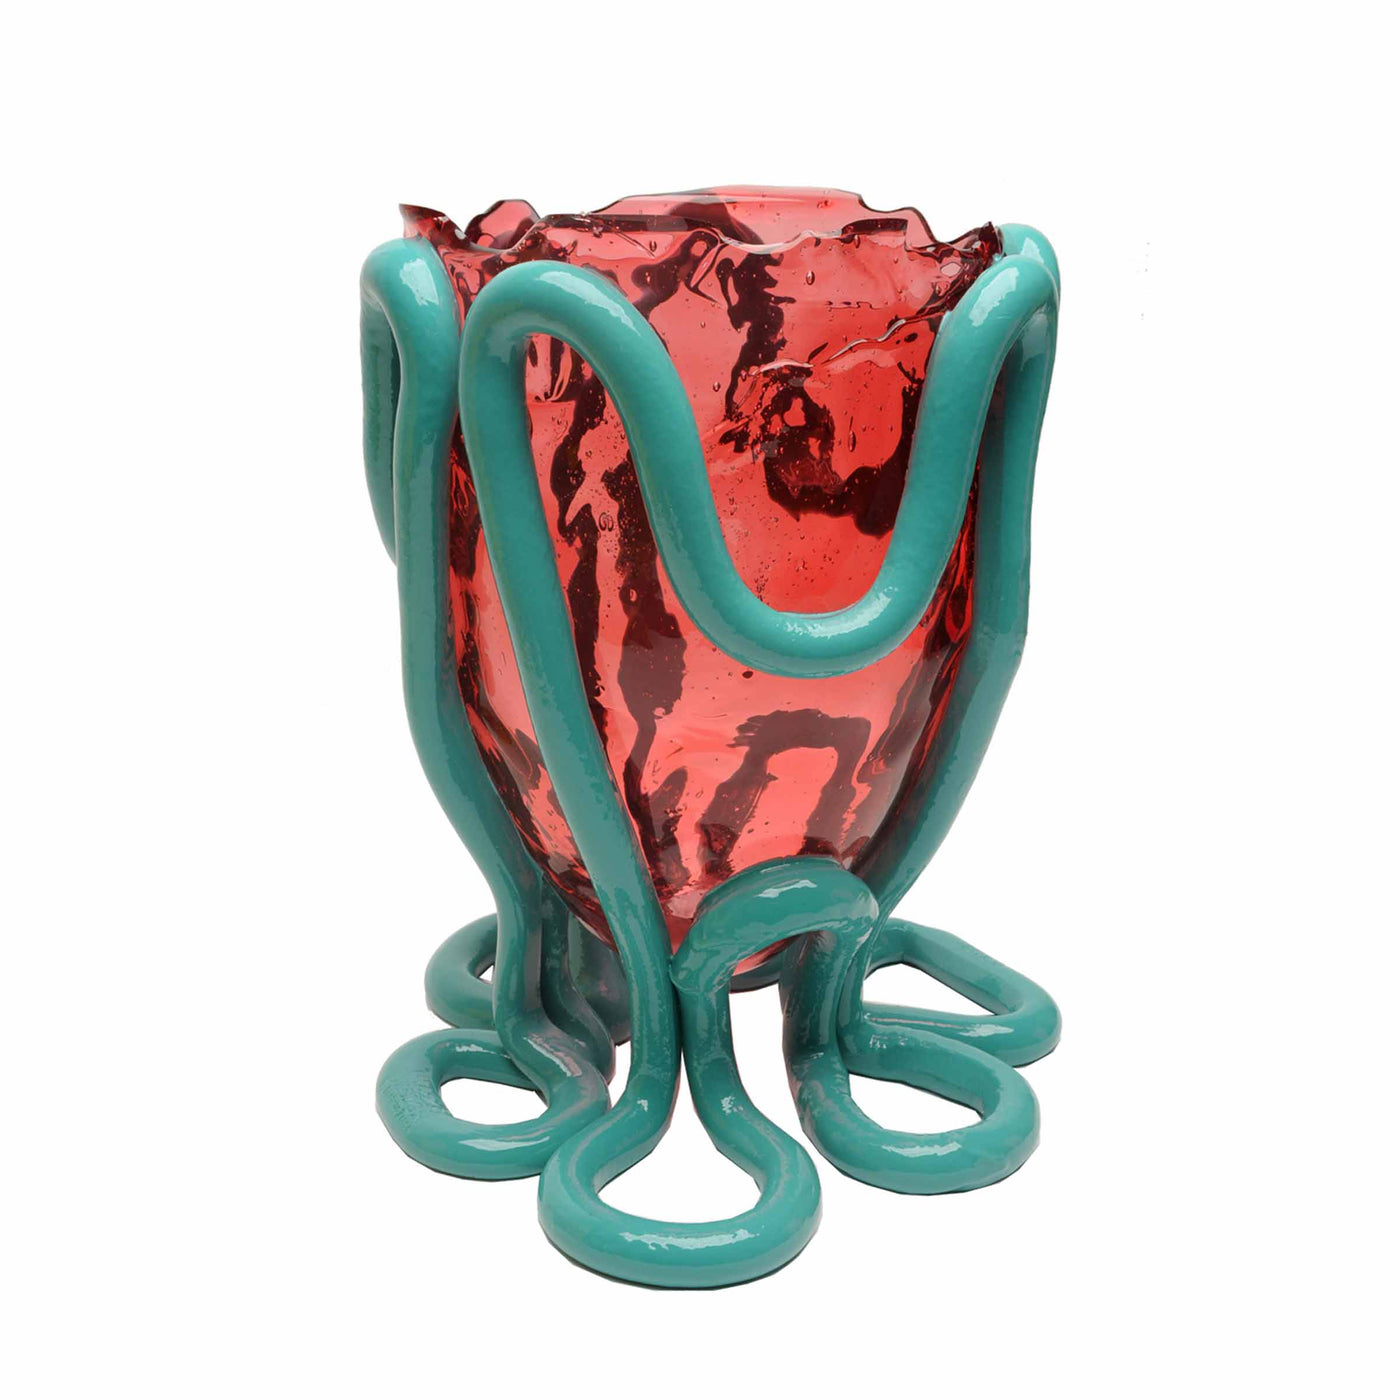 Resin Vase INDIAN SUMMER Clear Light Fuchsia and Matt Ocean by Gaetano Pesce for Fish Design 02